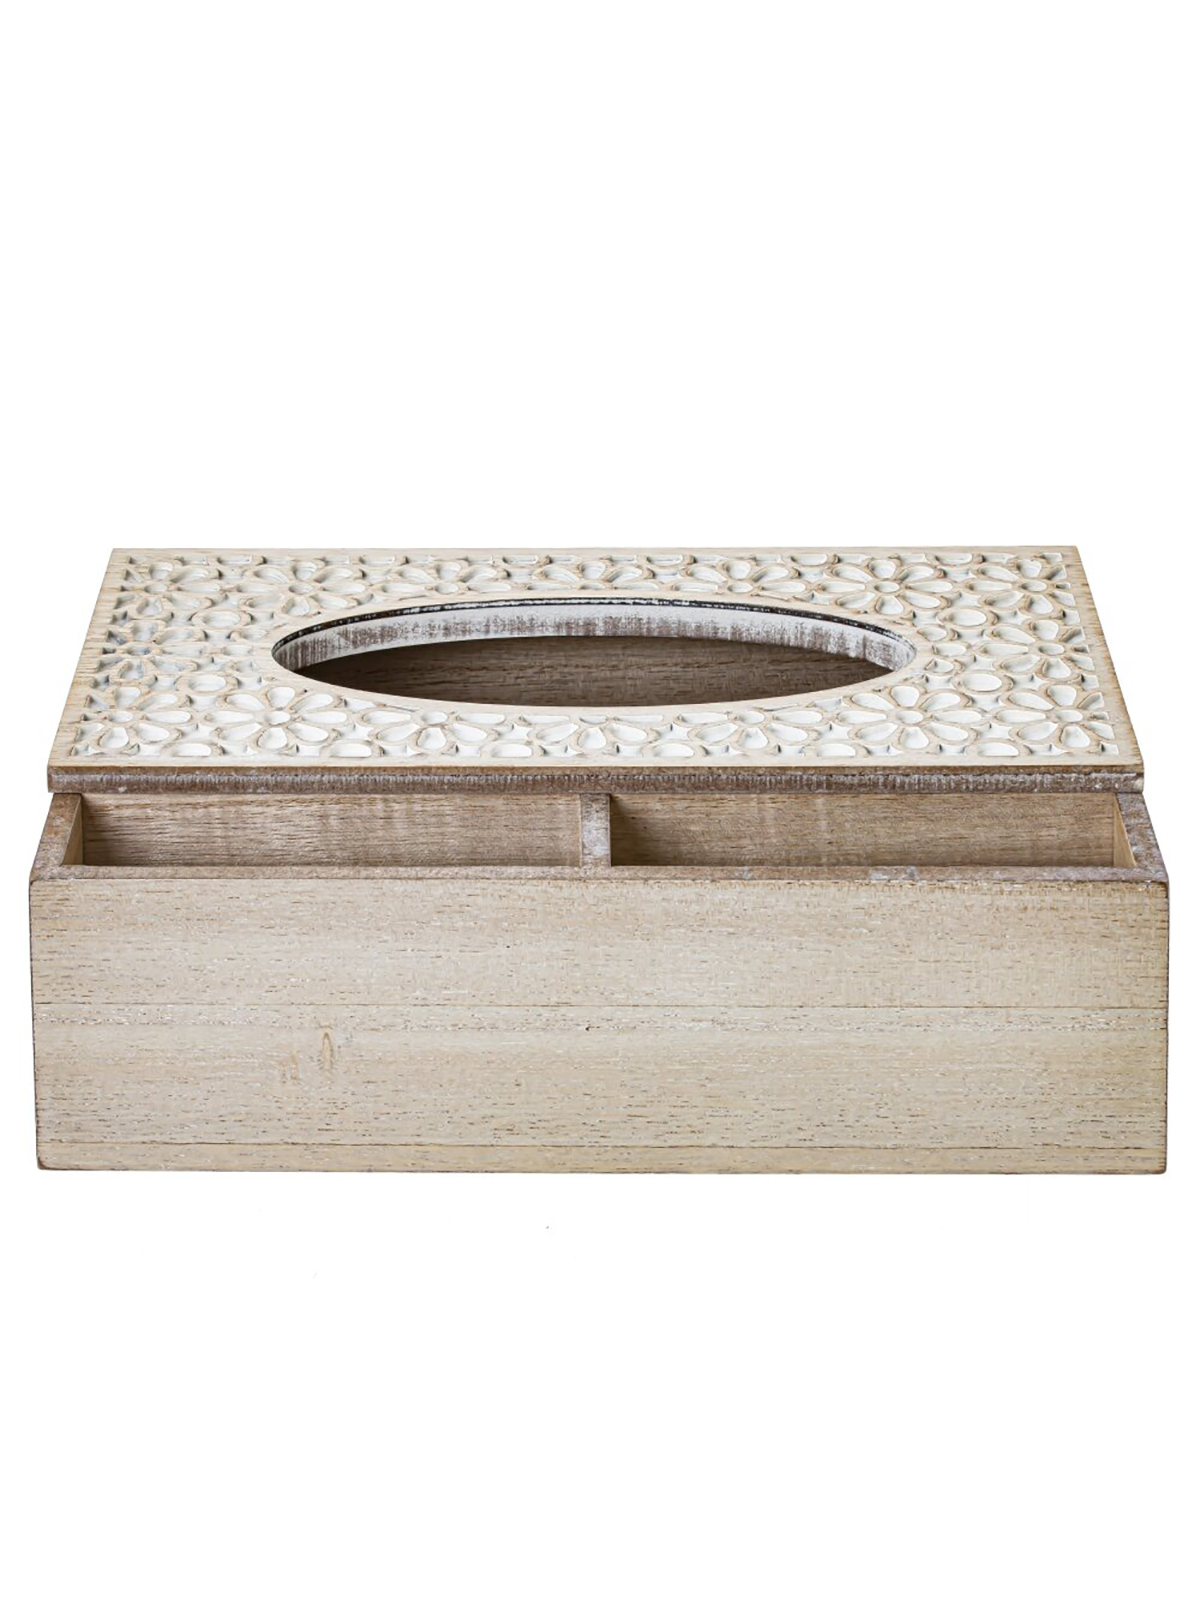 Салфетница на стол Remecoclub, деревянная, 24x16,5 см